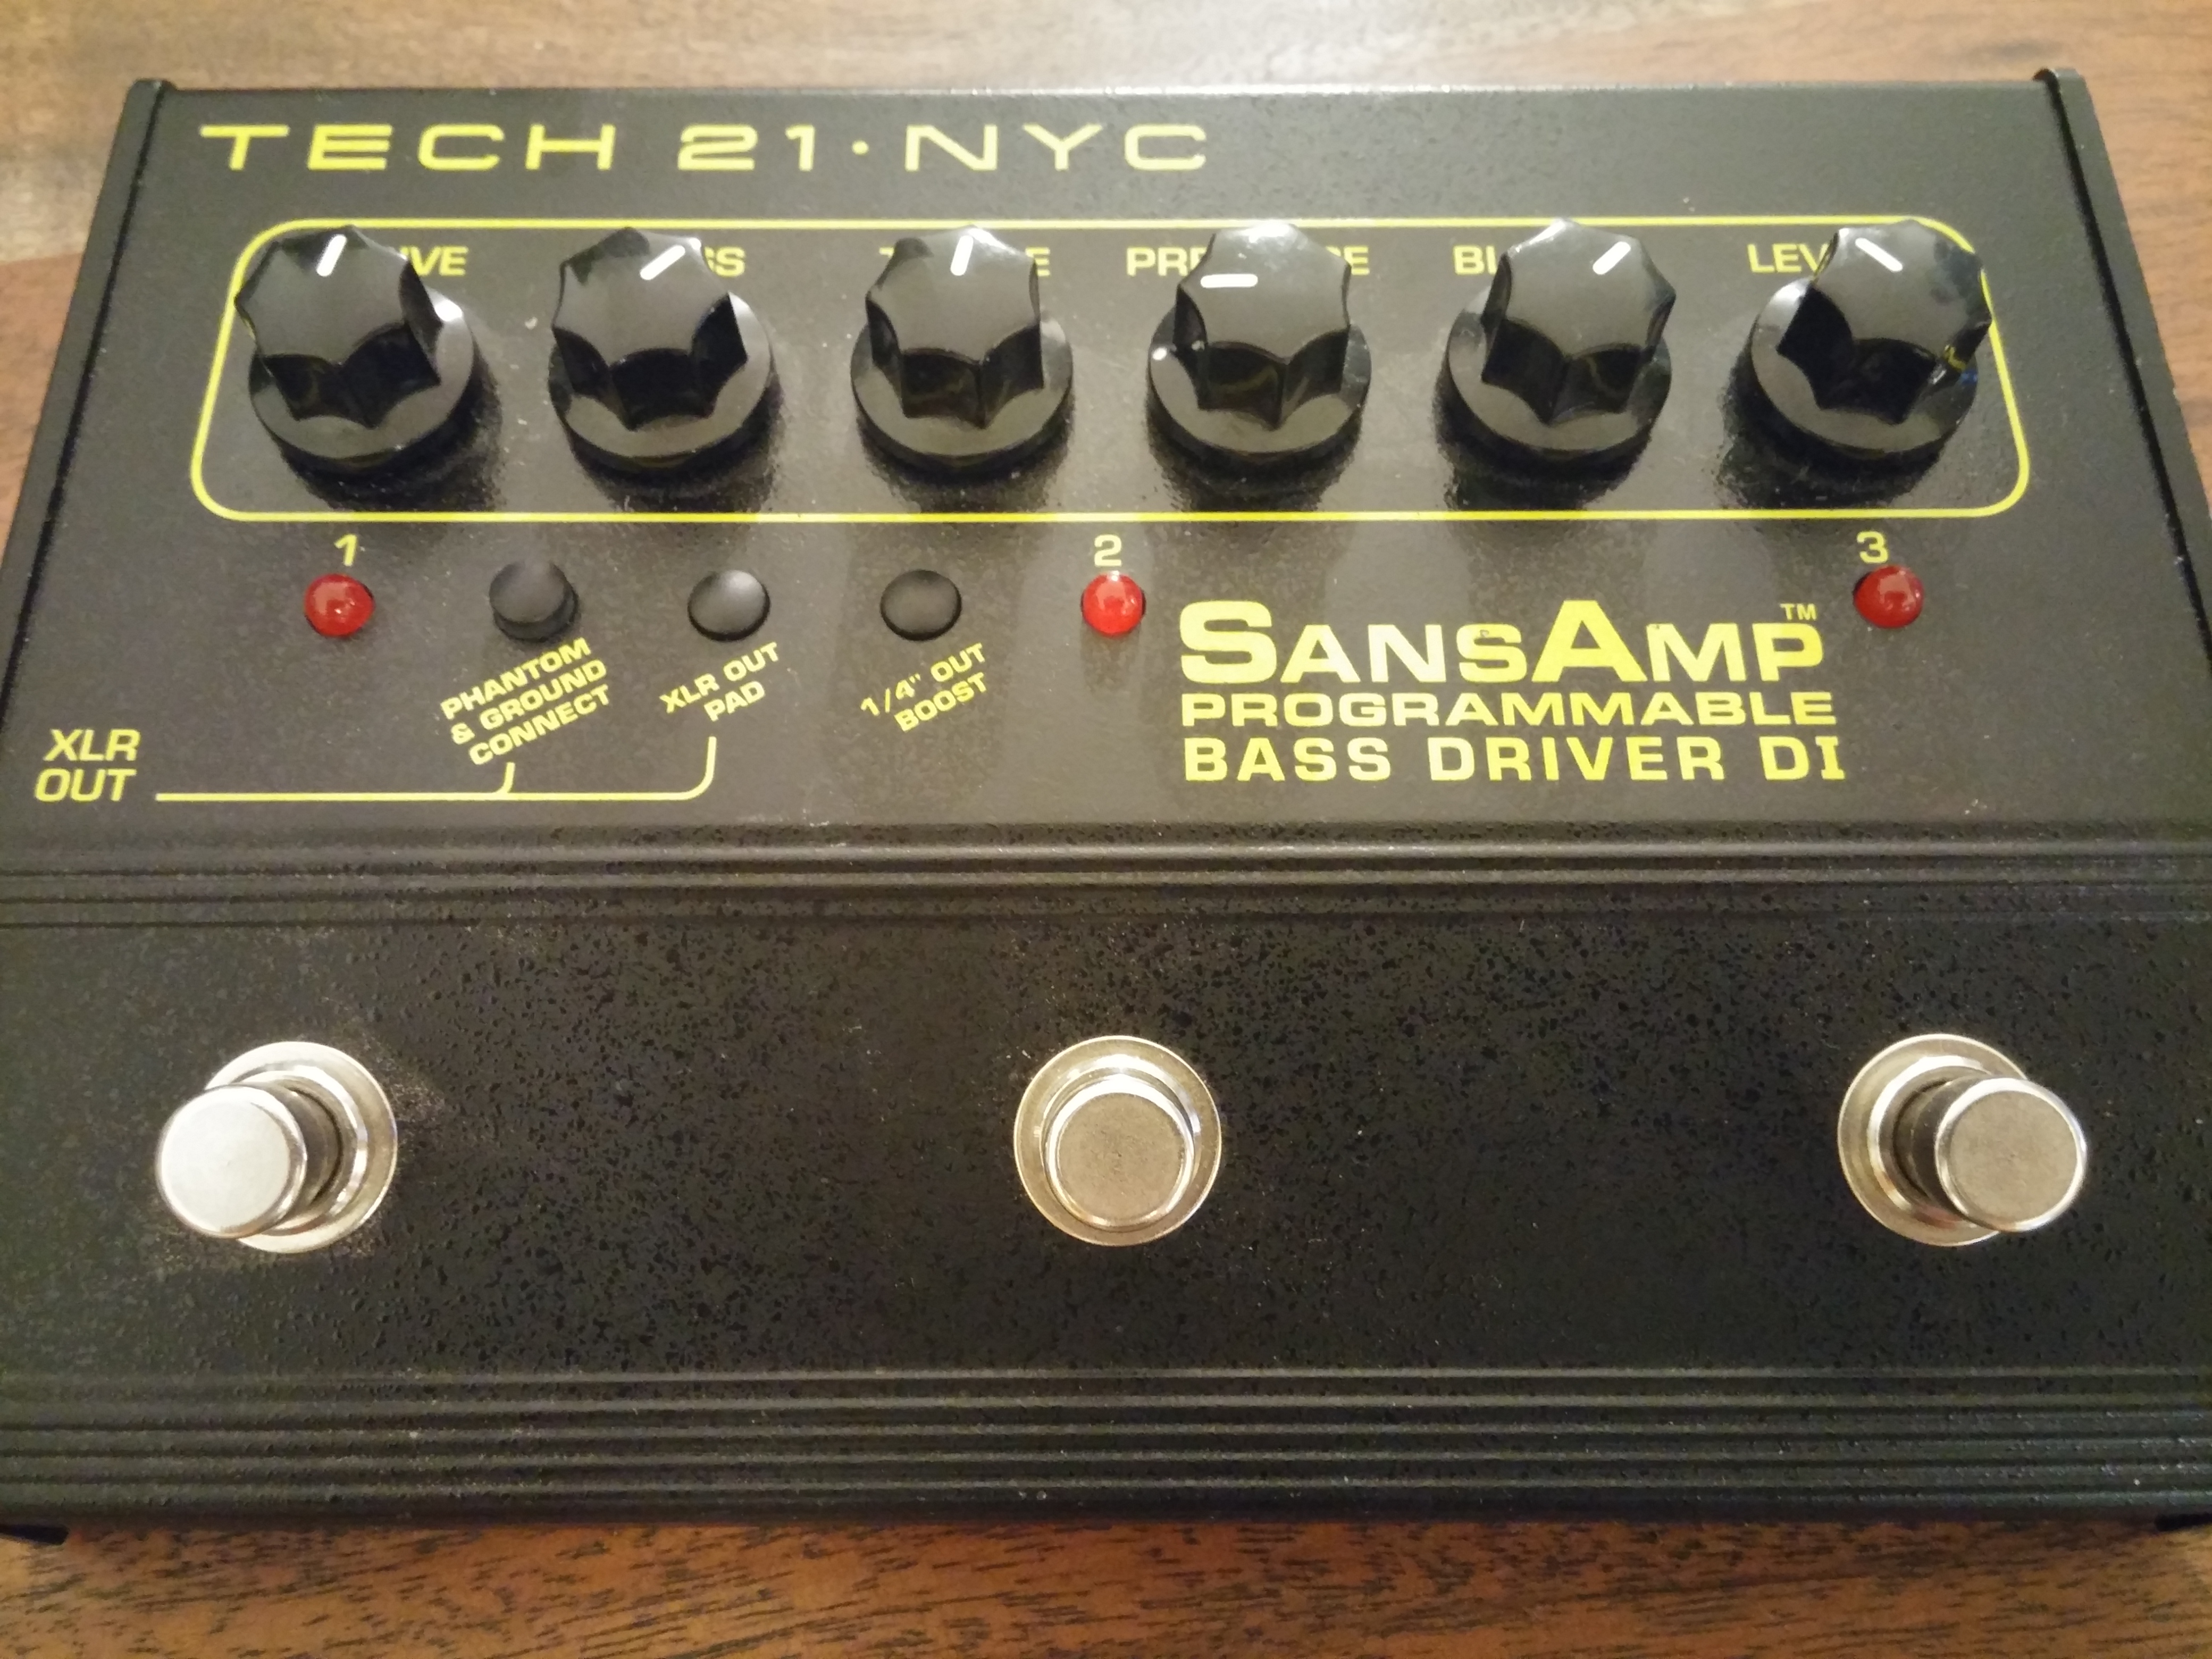 Tech 21 SansAmp Bass Driver DI Programmable image (#1516987) - Audiofanzine